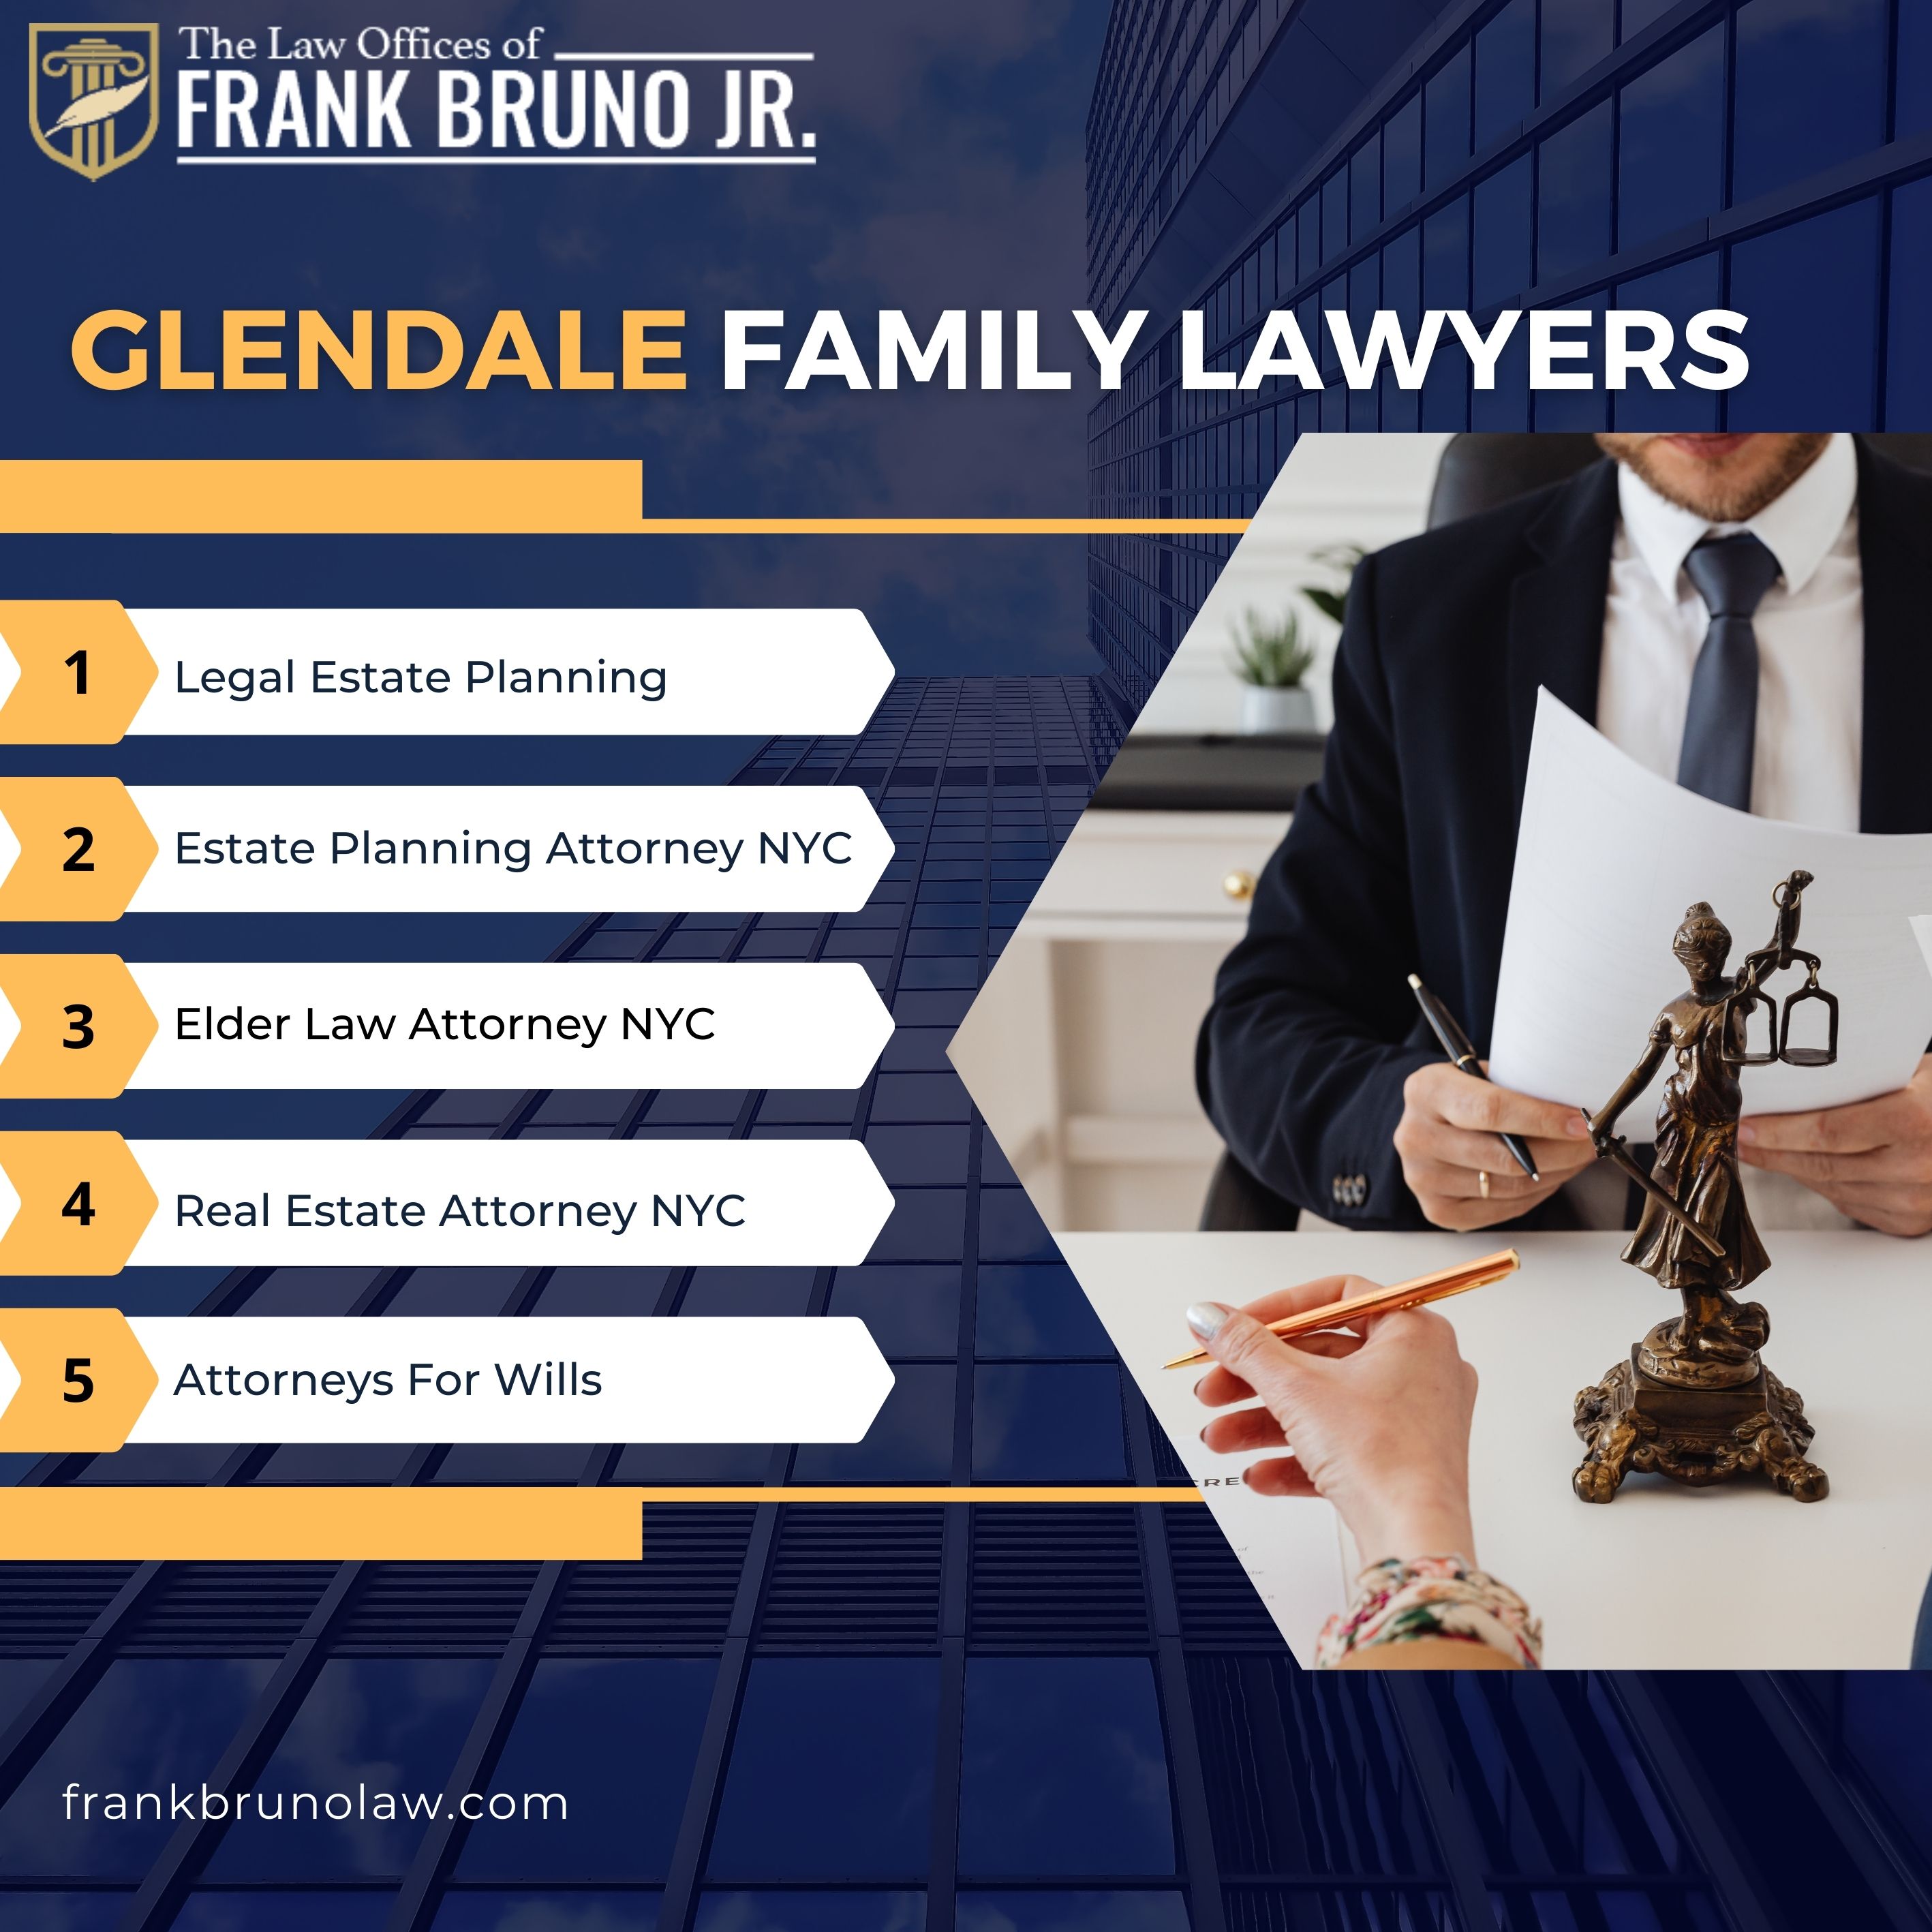 Real Estate Attorney NYC - New York - New York ID1553795